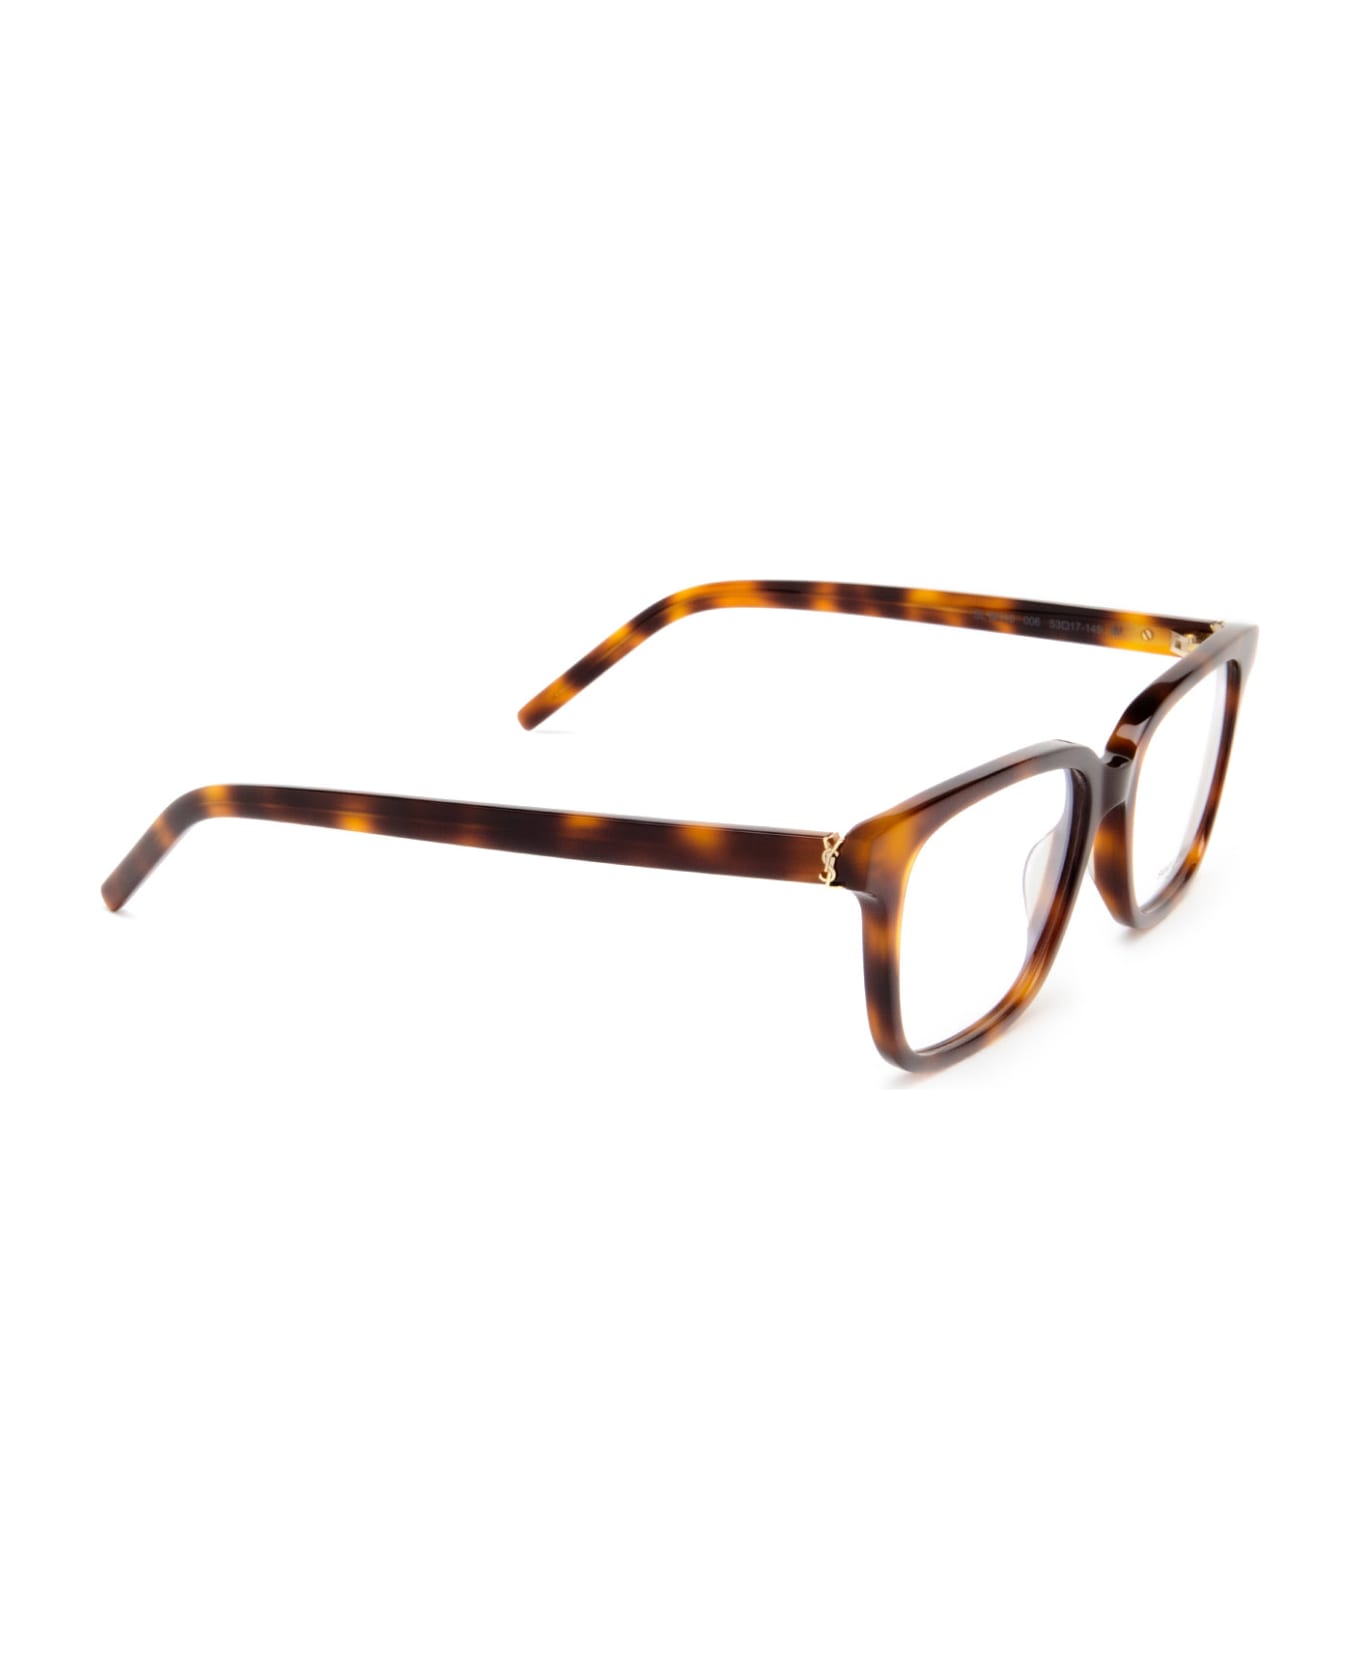 Saint Laurent Eyewear Sl M110 Havana Glasses - Havana